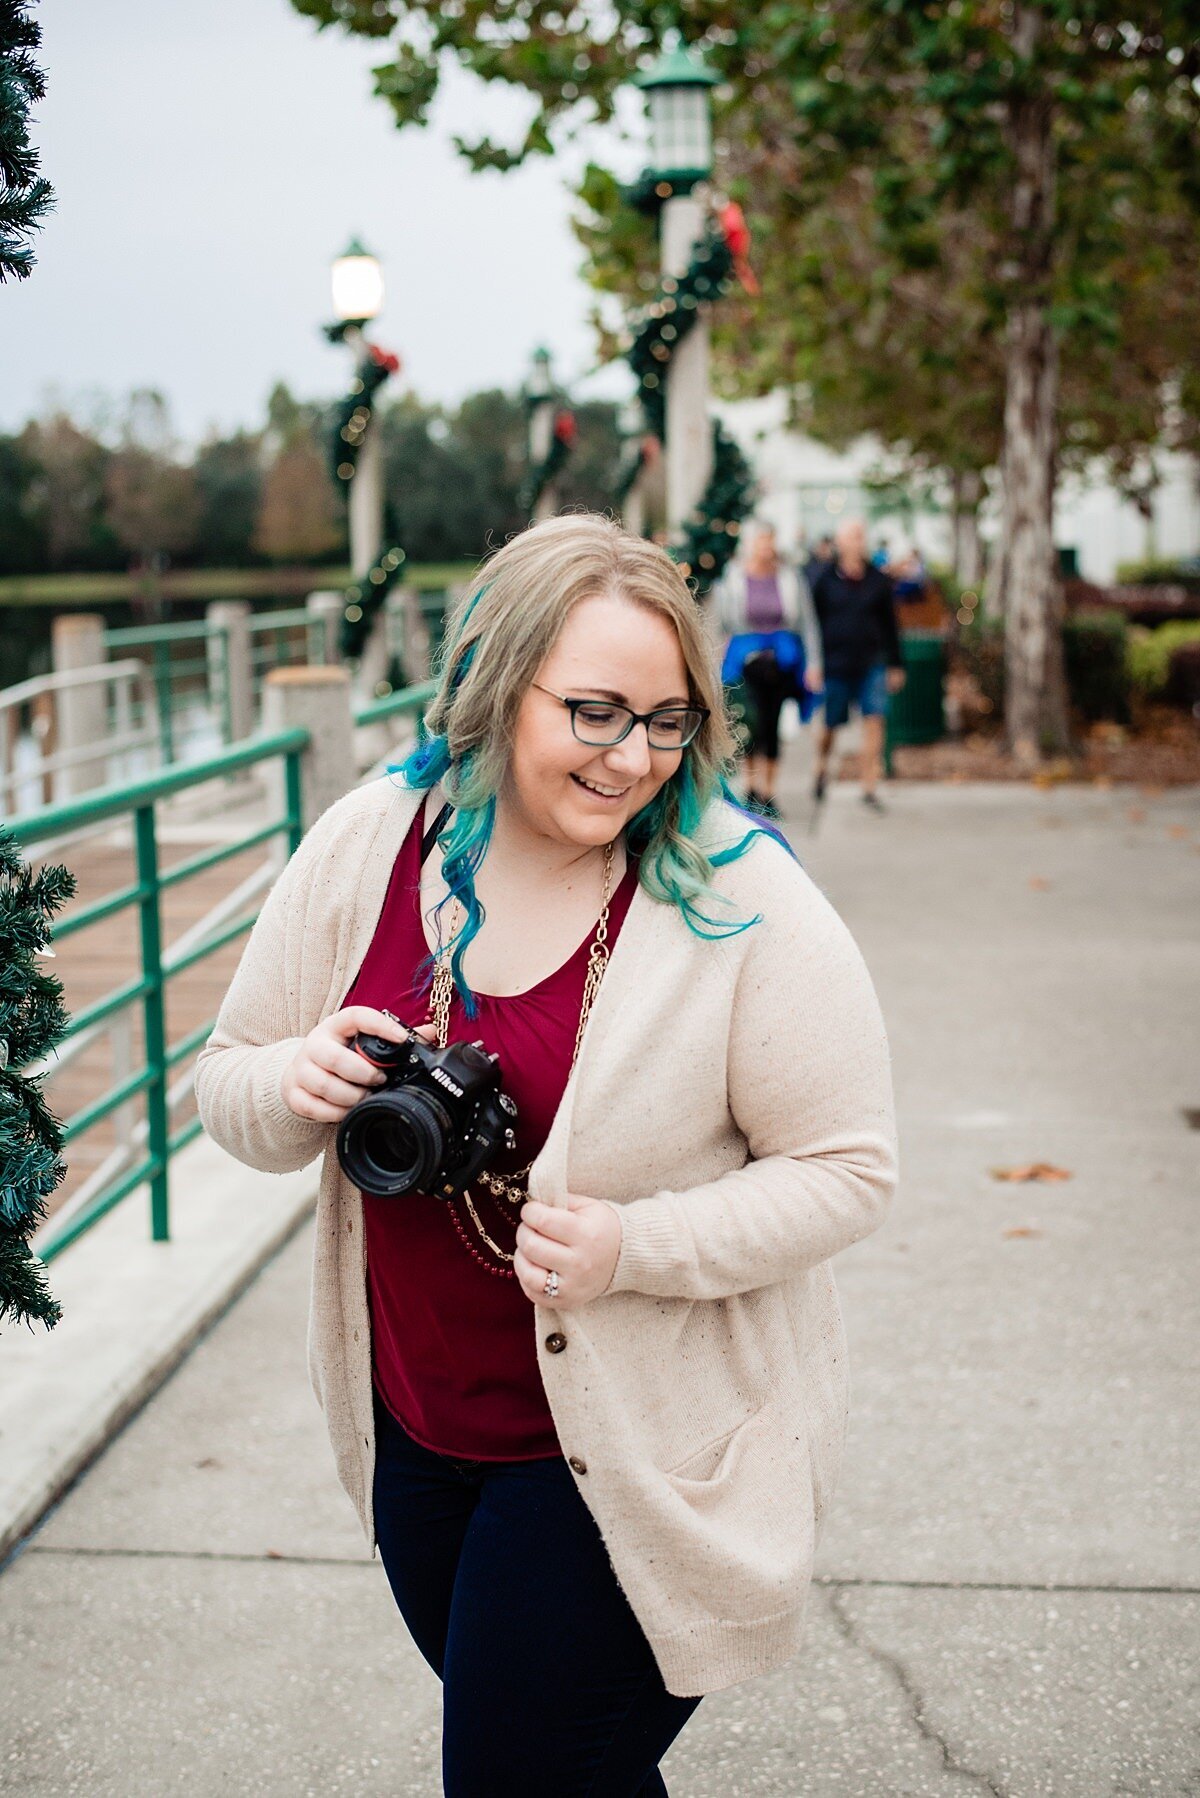 Mahlia holding a Nikon camera outside at Christmas time